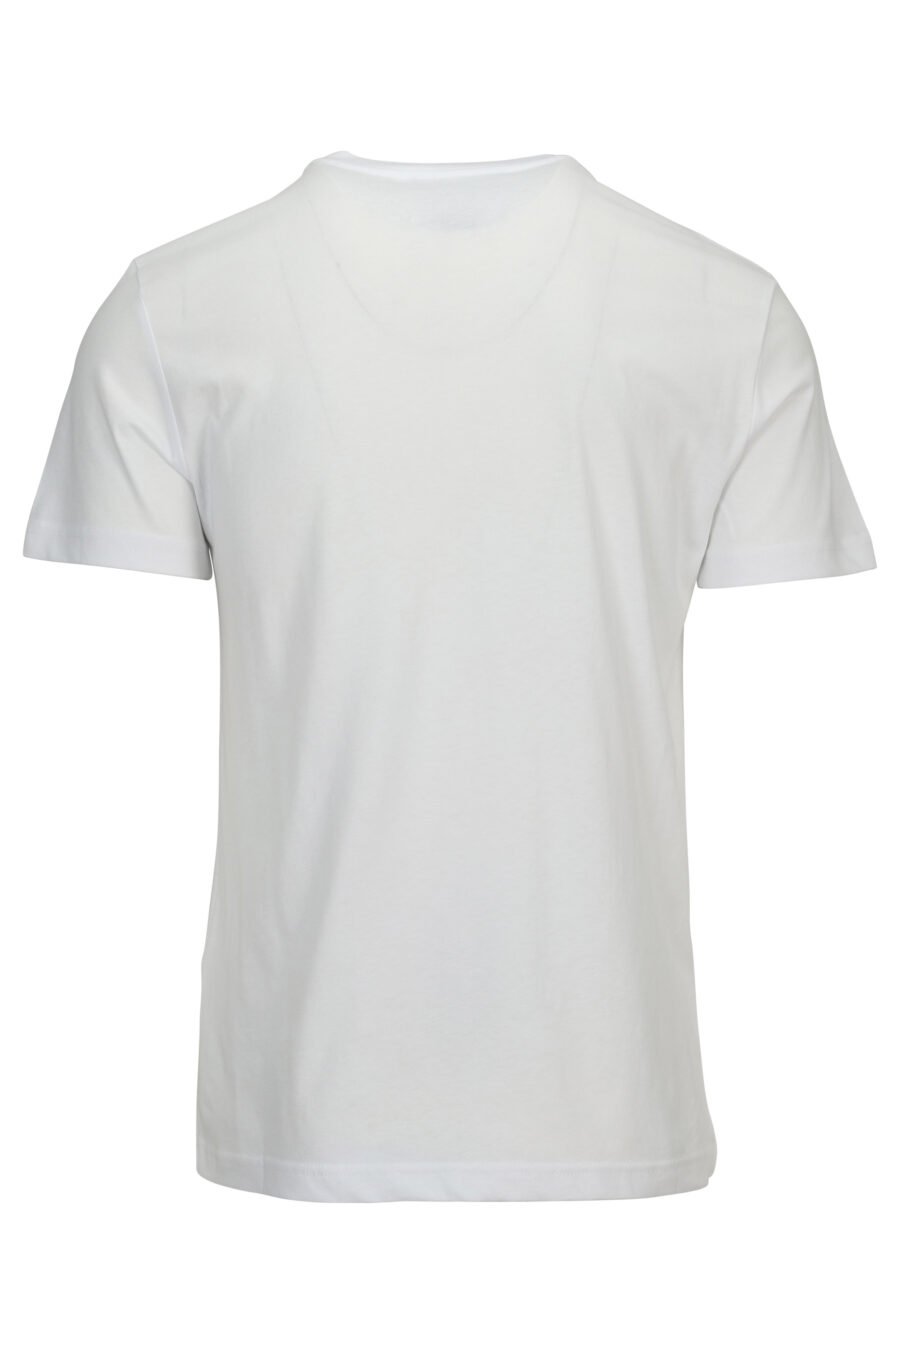 T-shirt blanc avec maxilogo doré brillant - 8052019579987 1